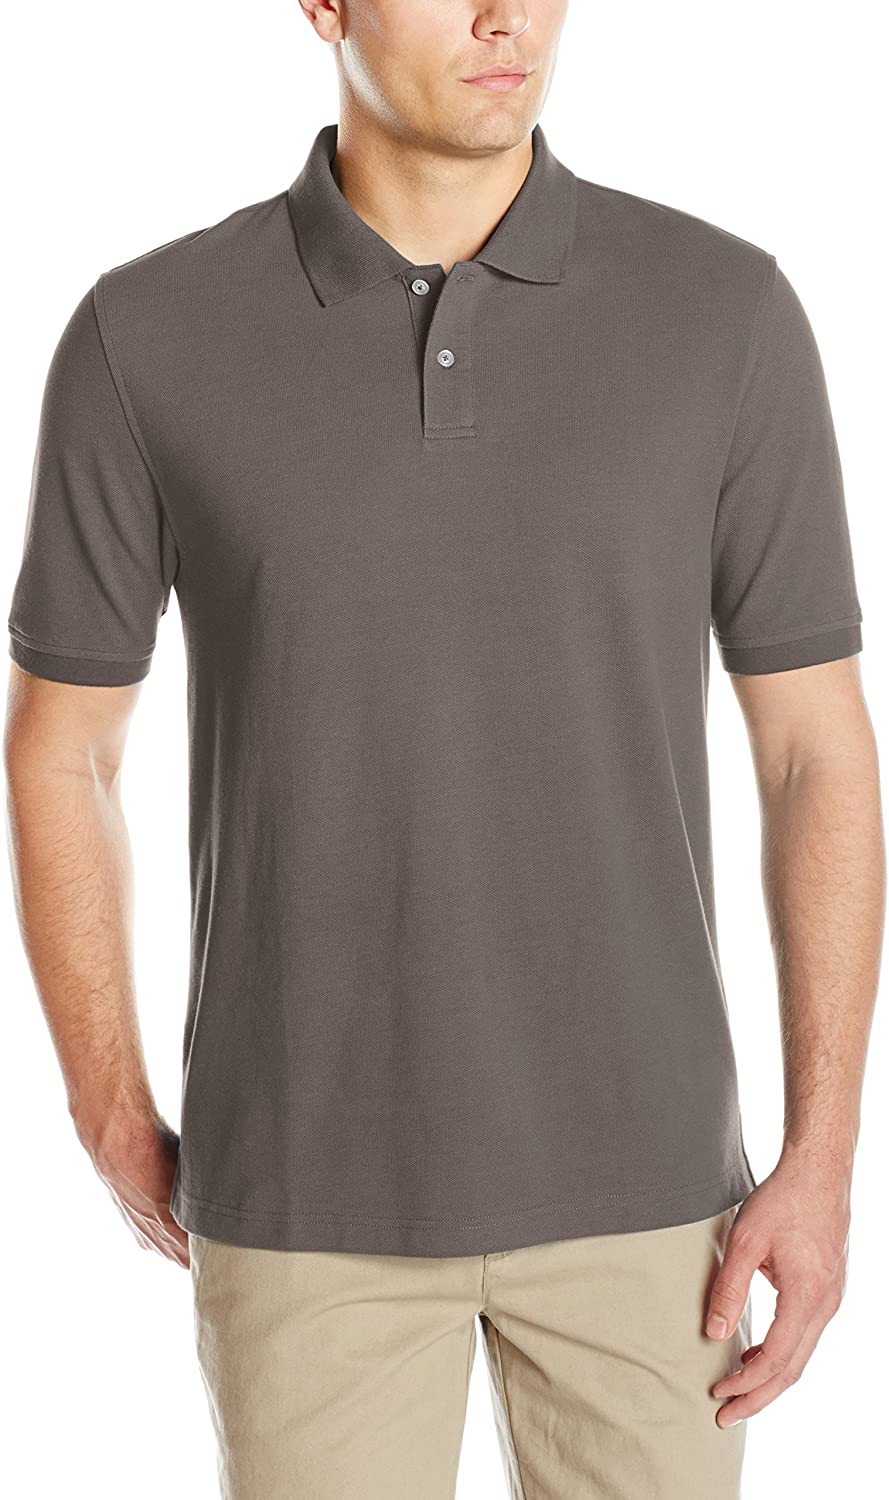 Essentials Men's Regular-fit Cotton Pique Polo Shirt, Grey, Size Medium ...